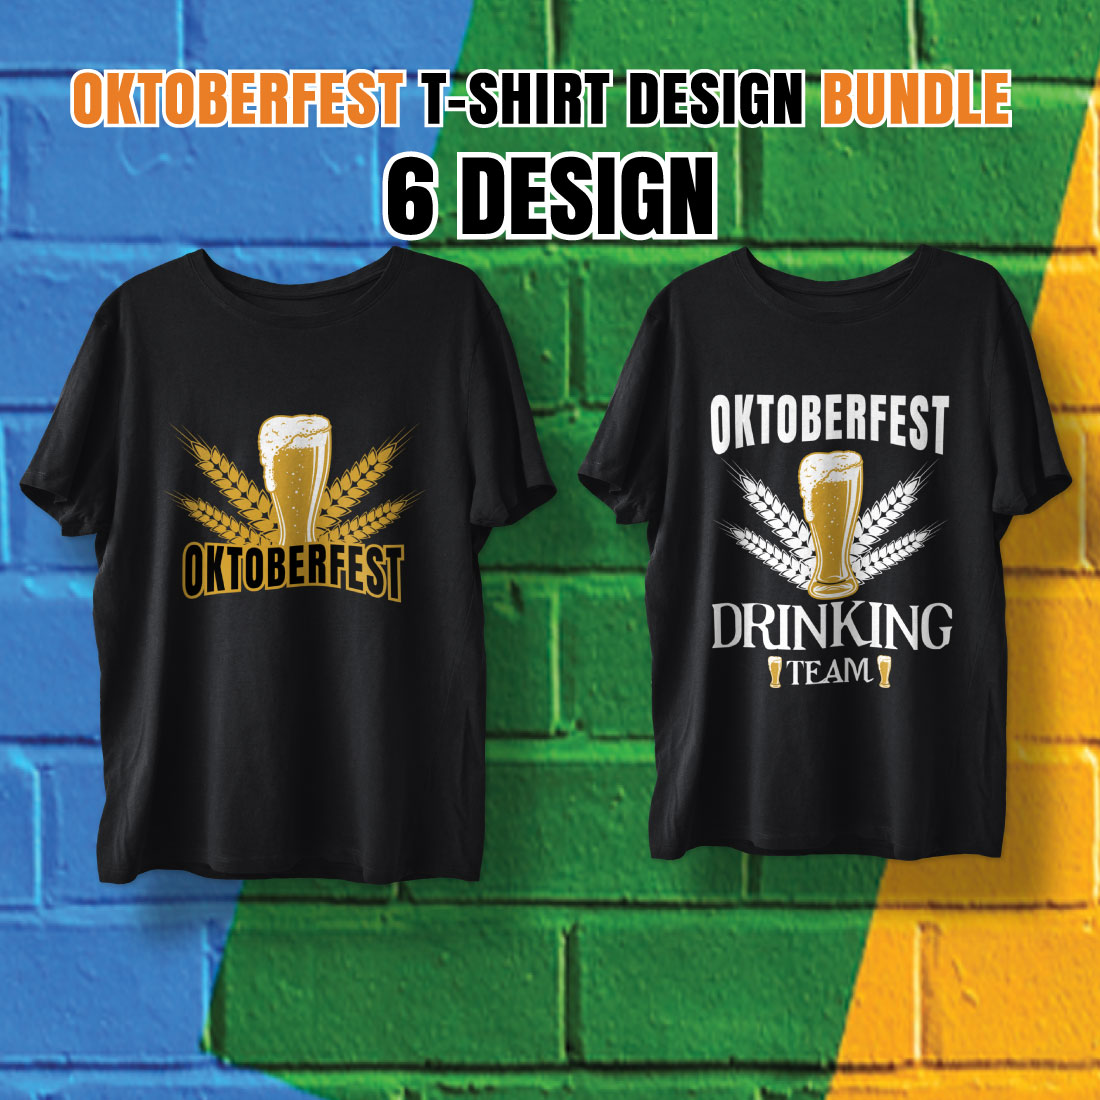 6 Print Ready Oktoberfest T-Shirt Design Bundle preview image.